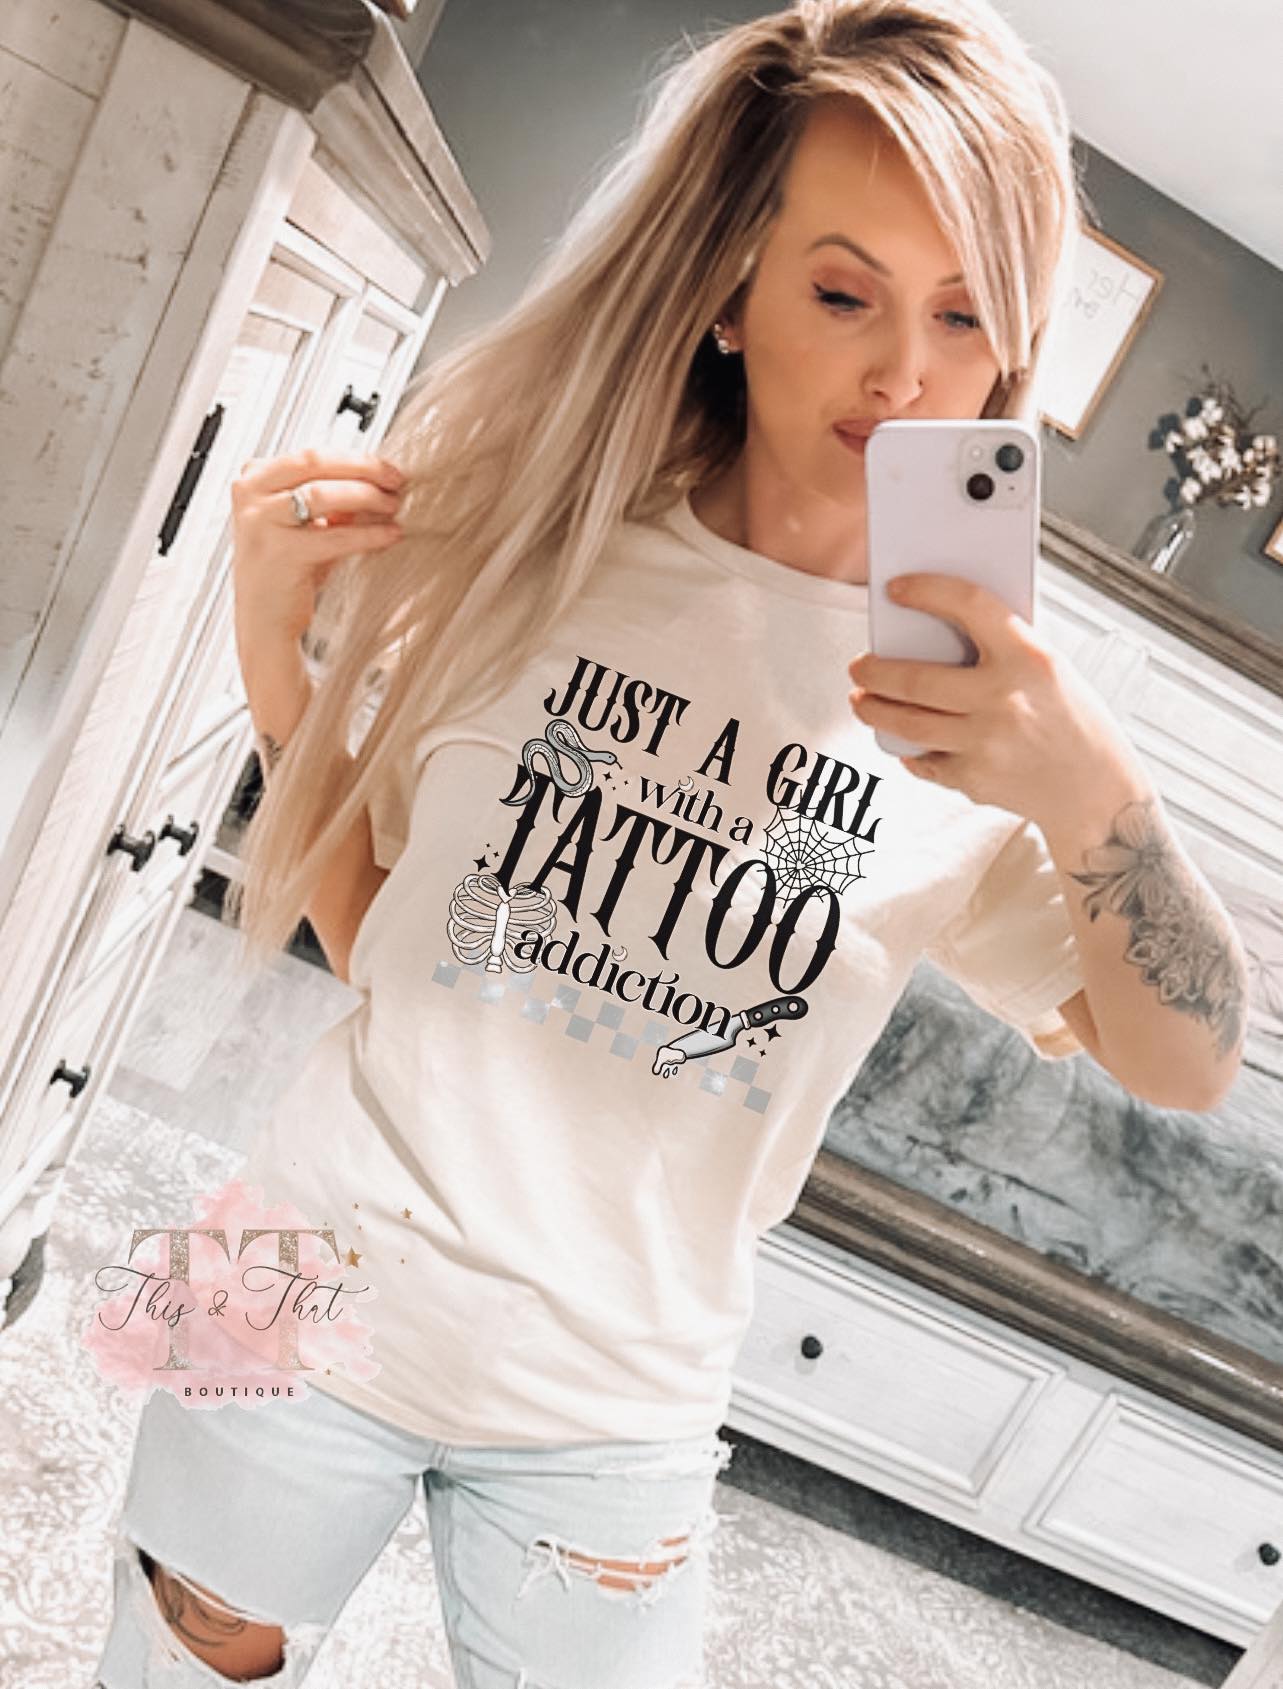 Tattoo Addiction